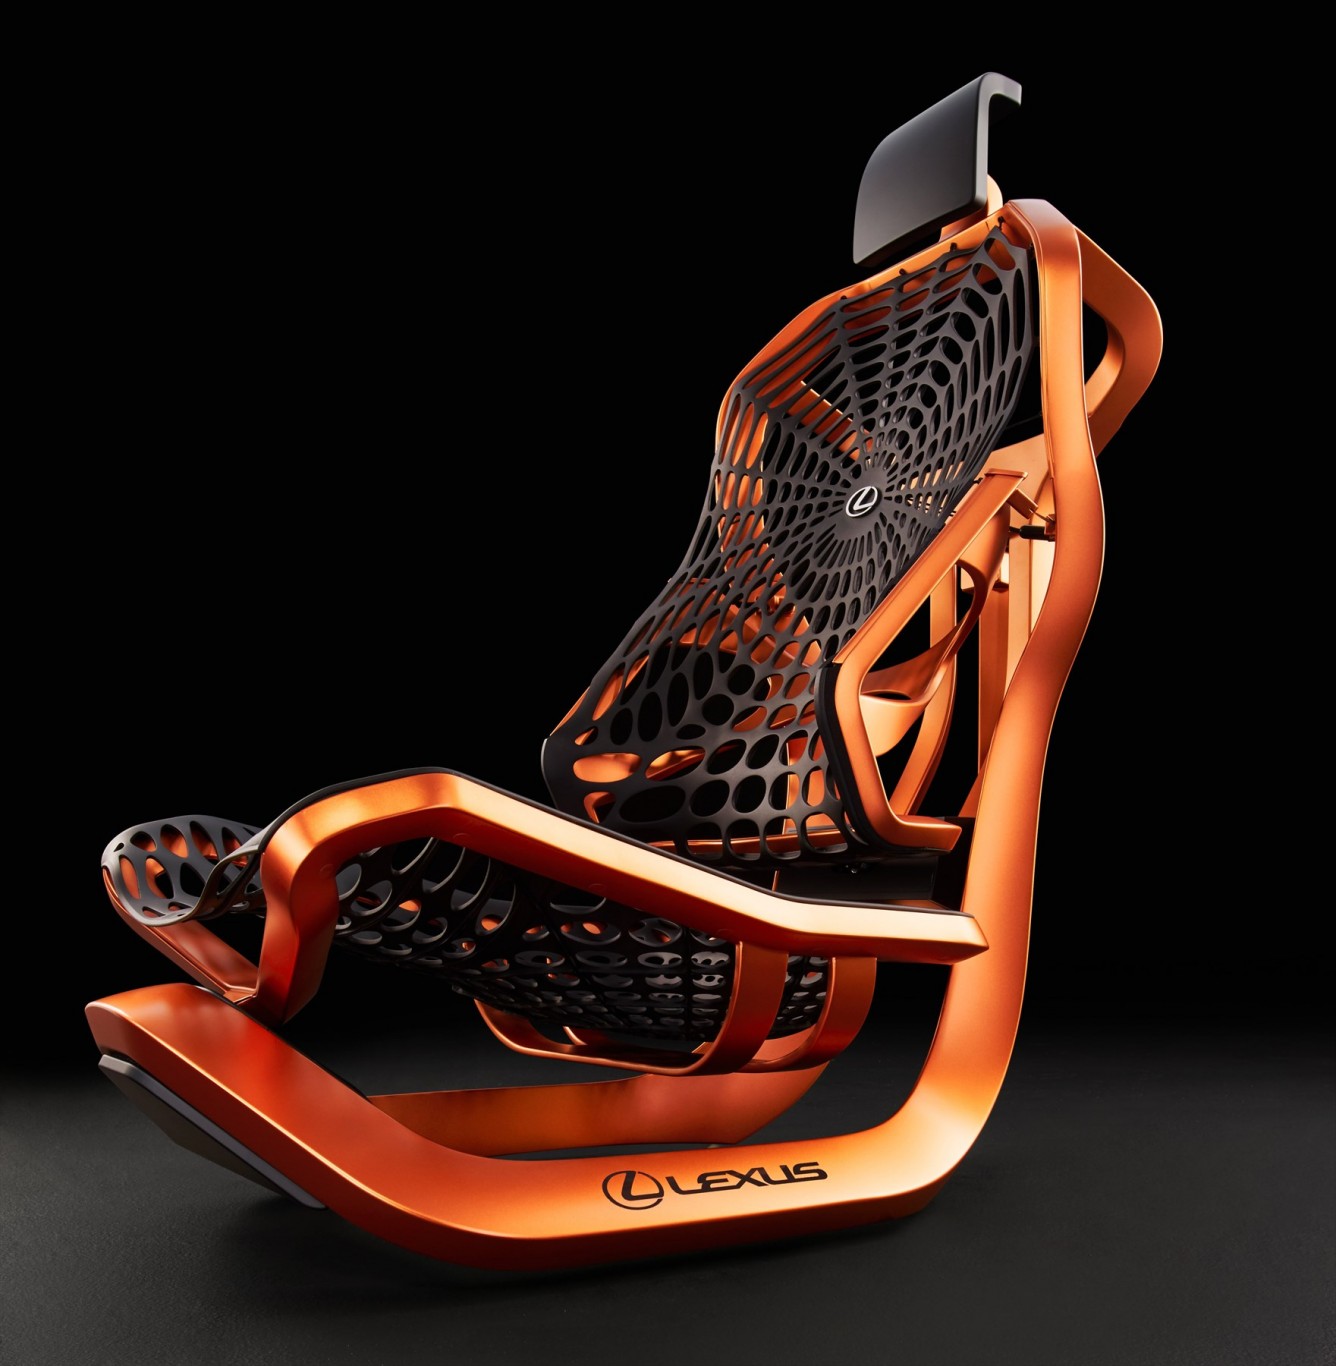 Lexus to unveil new kinetic seat concept